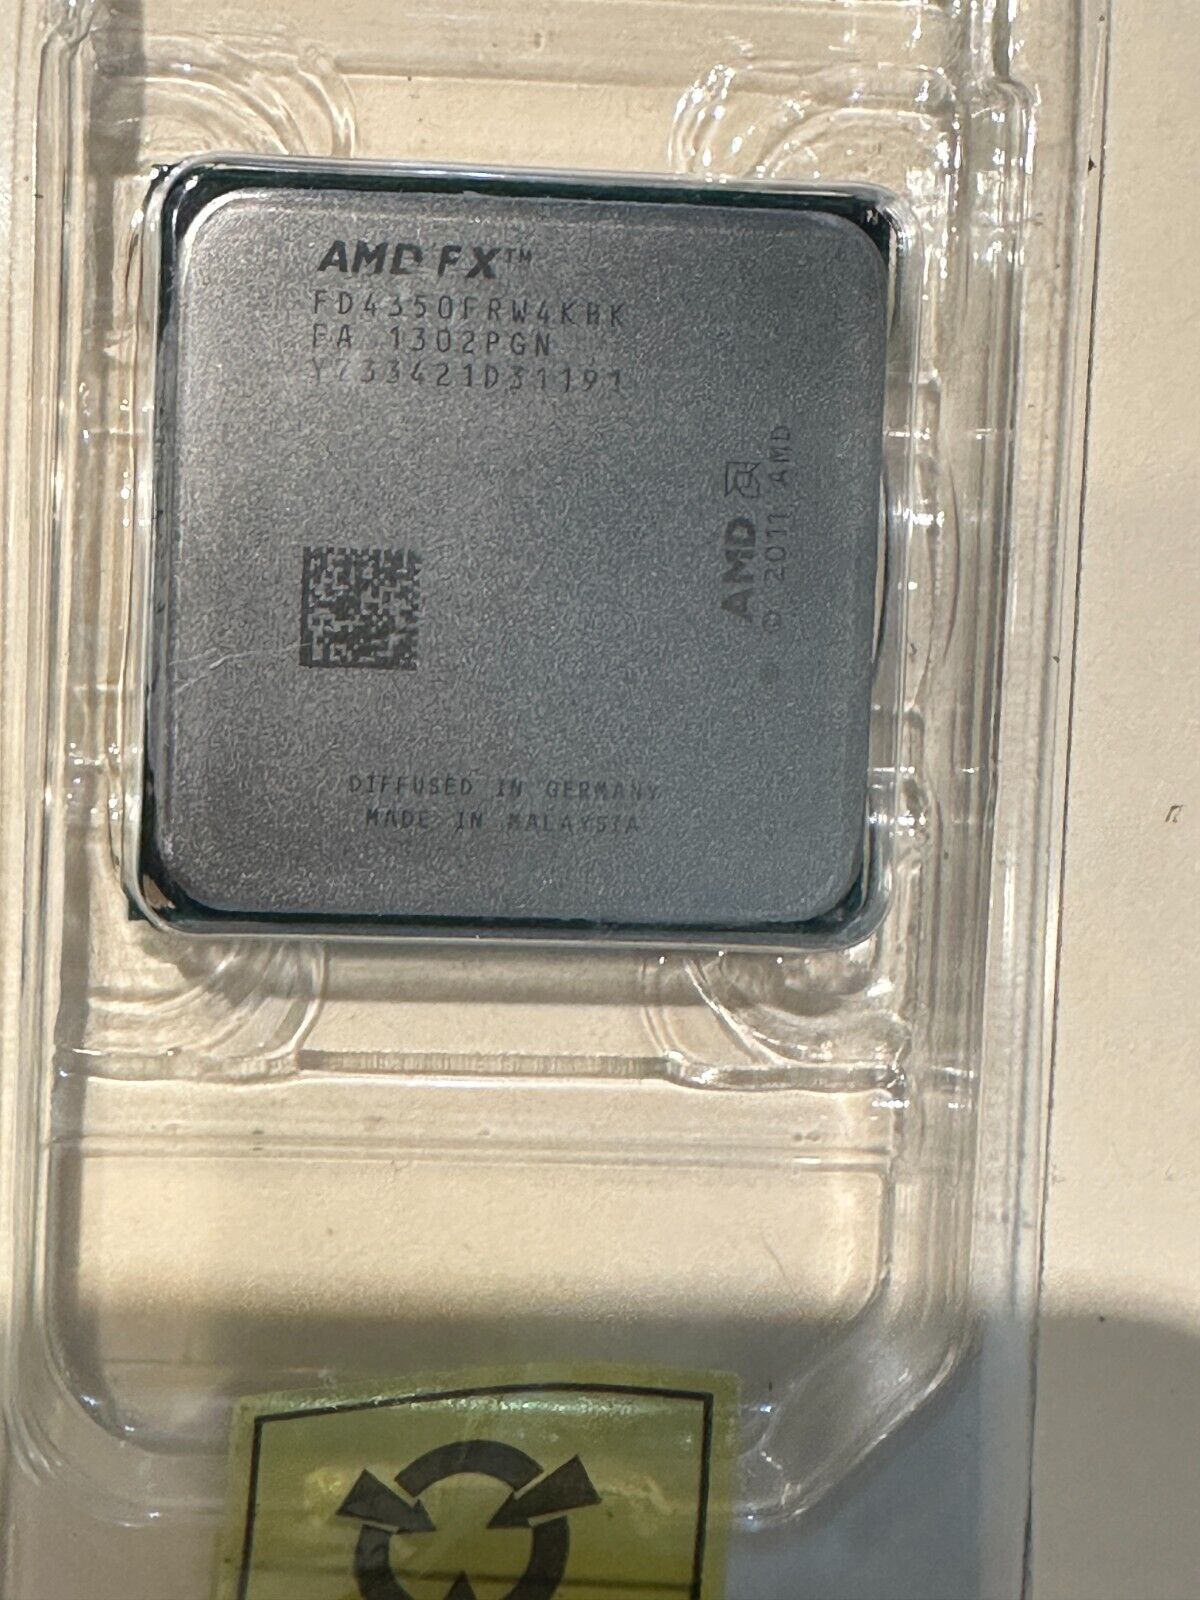 AMD FX 4350 FD4350FRW4KHK 4.2 - 4.3 GHz AM3+ Quad-Core Processor